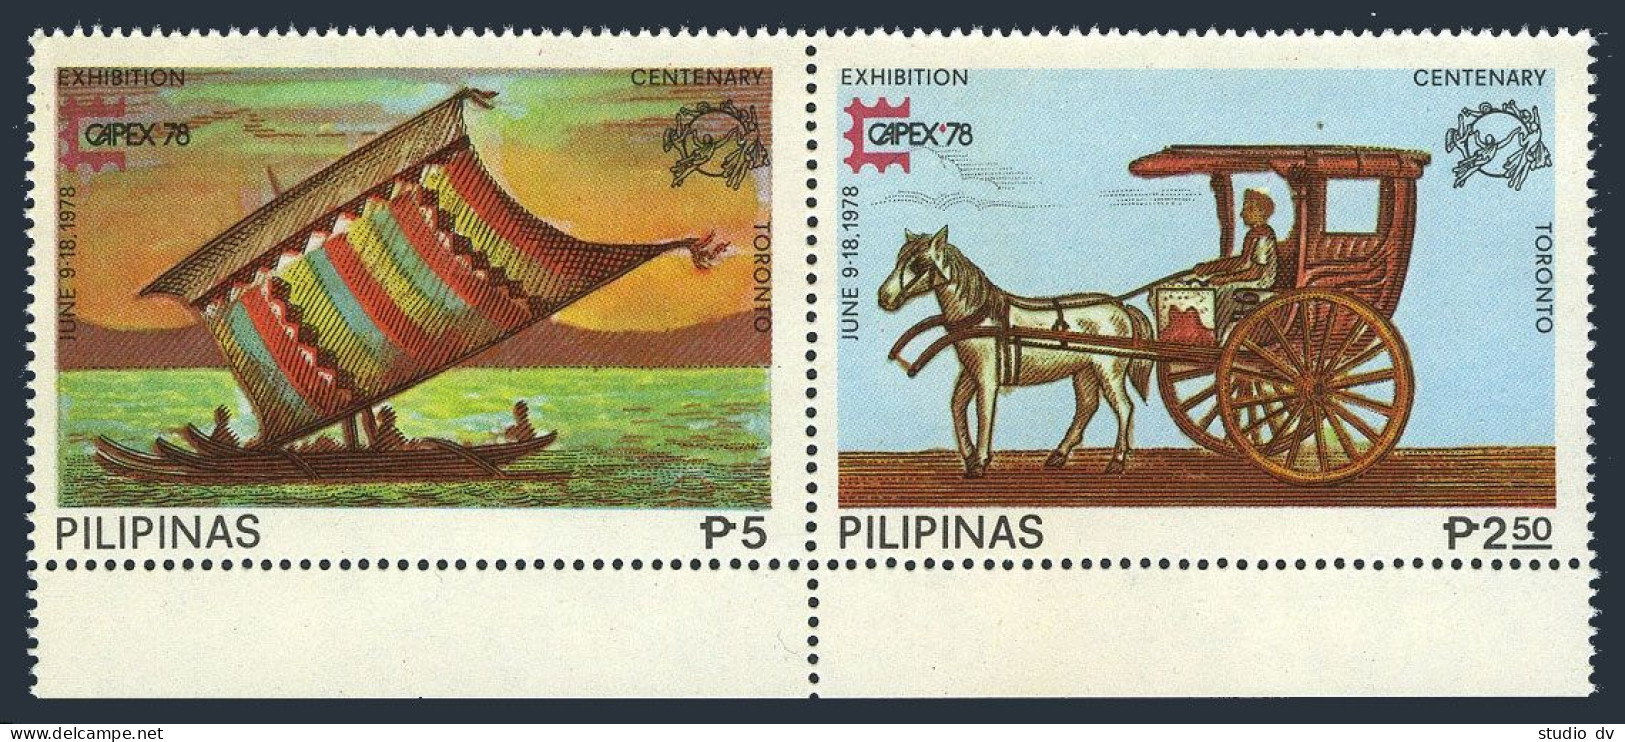 Philippines 1348-1350,1350e Imperf.MNH. CAPEX-1978,UPU,Moro Vinta,Mail Cart,Ship - Philippinen